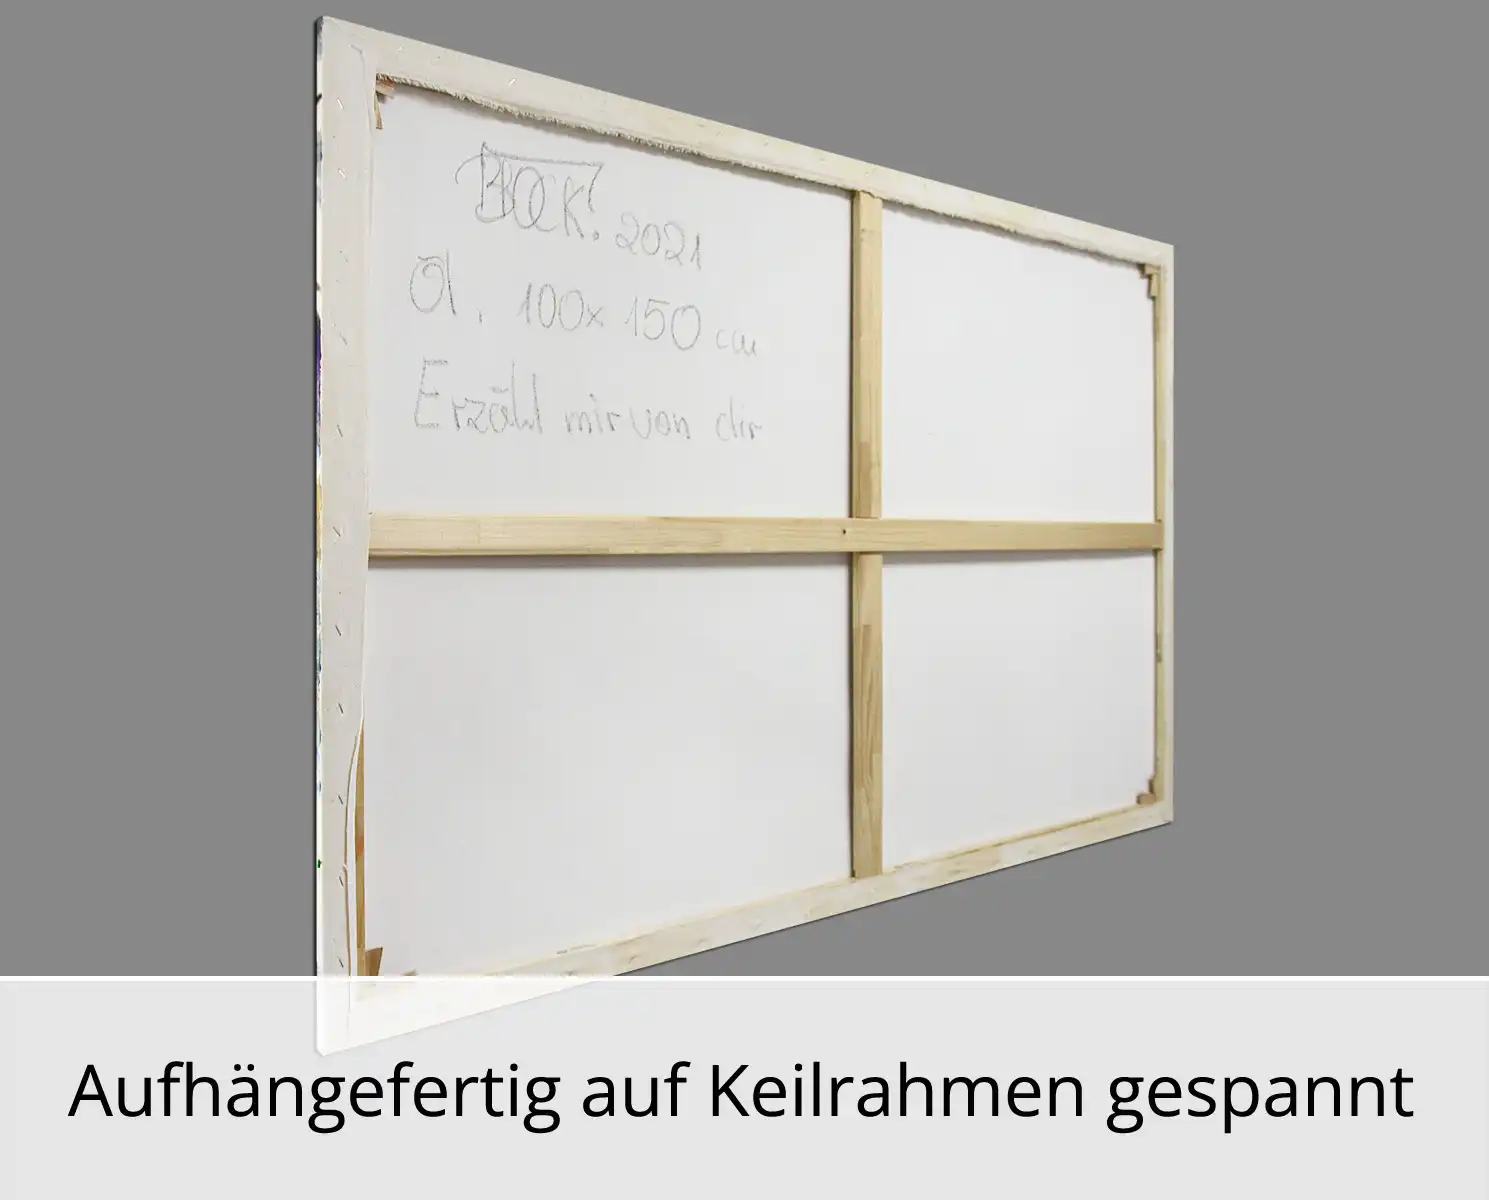 D. Block: "Erzähl mir von dir", Original/Unikat, expressive Ölmalerei